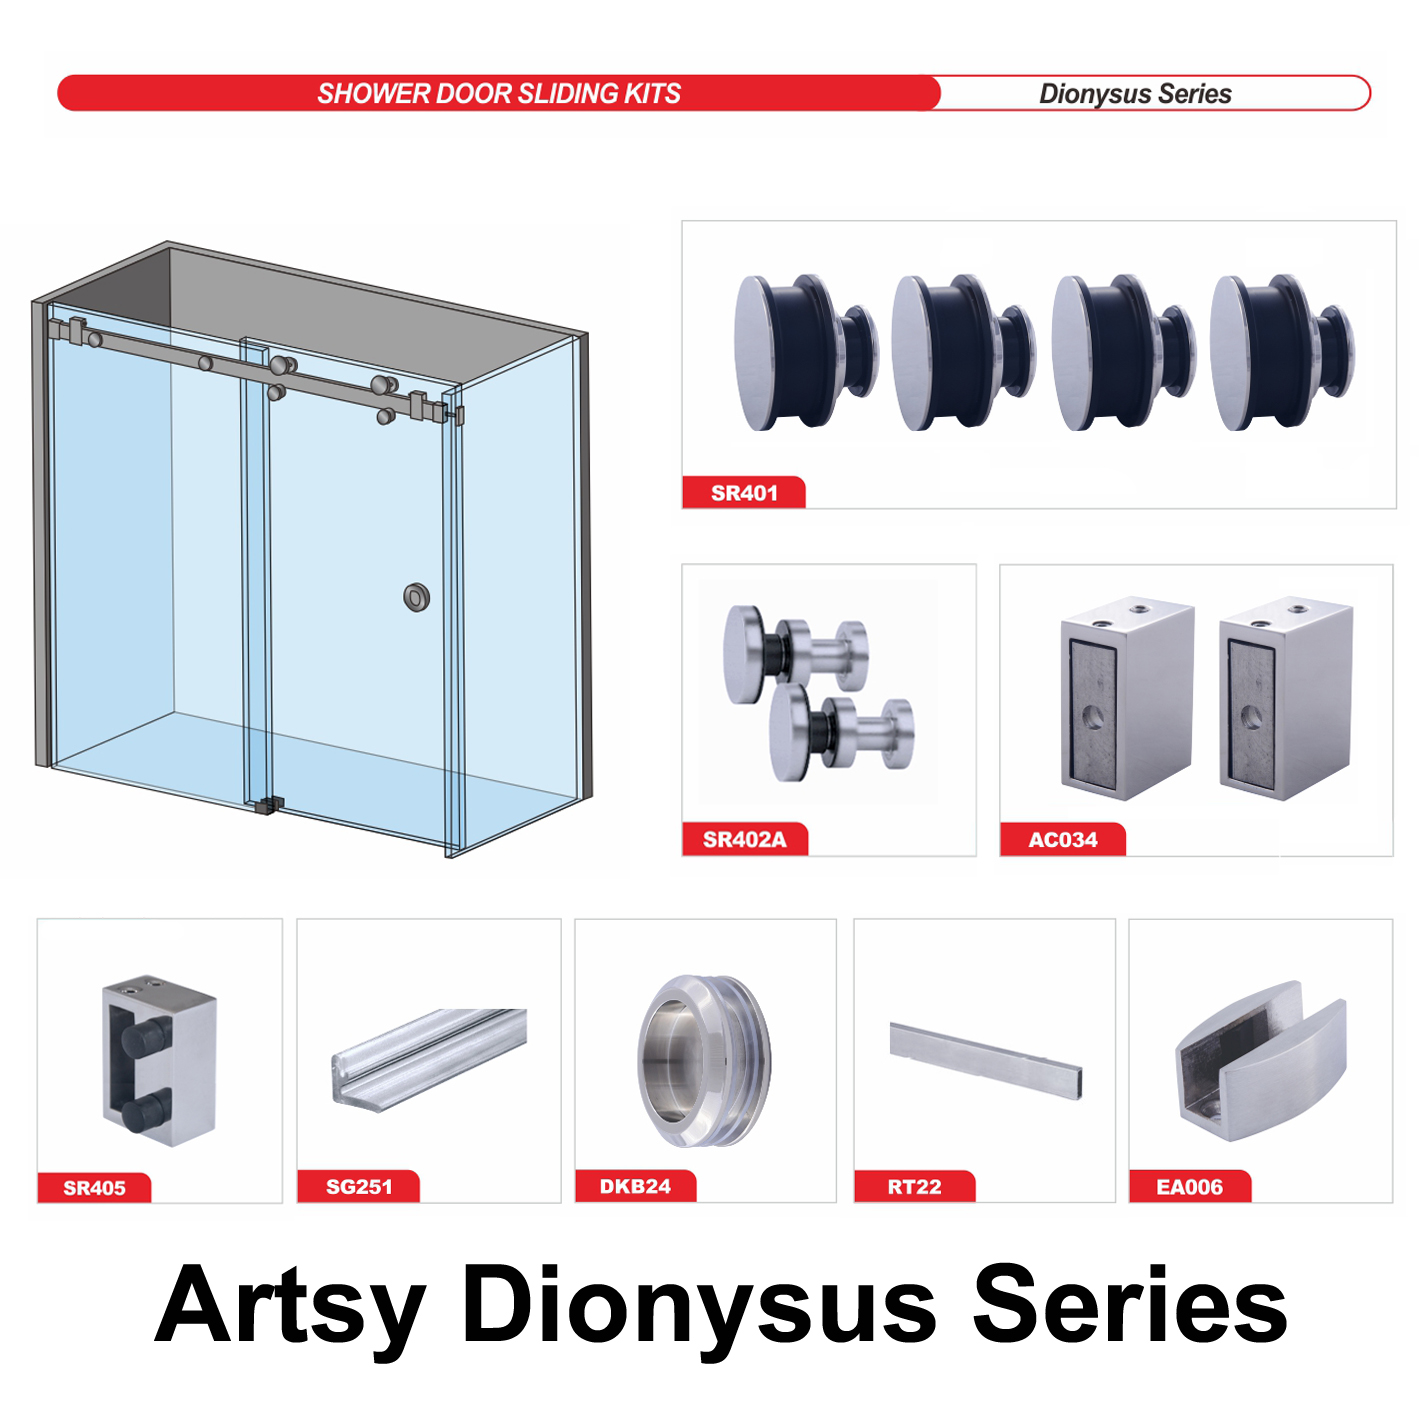 WALKER Stainless Steel Deluxe 180 Degree Artsy Dionysus Series Sliding System